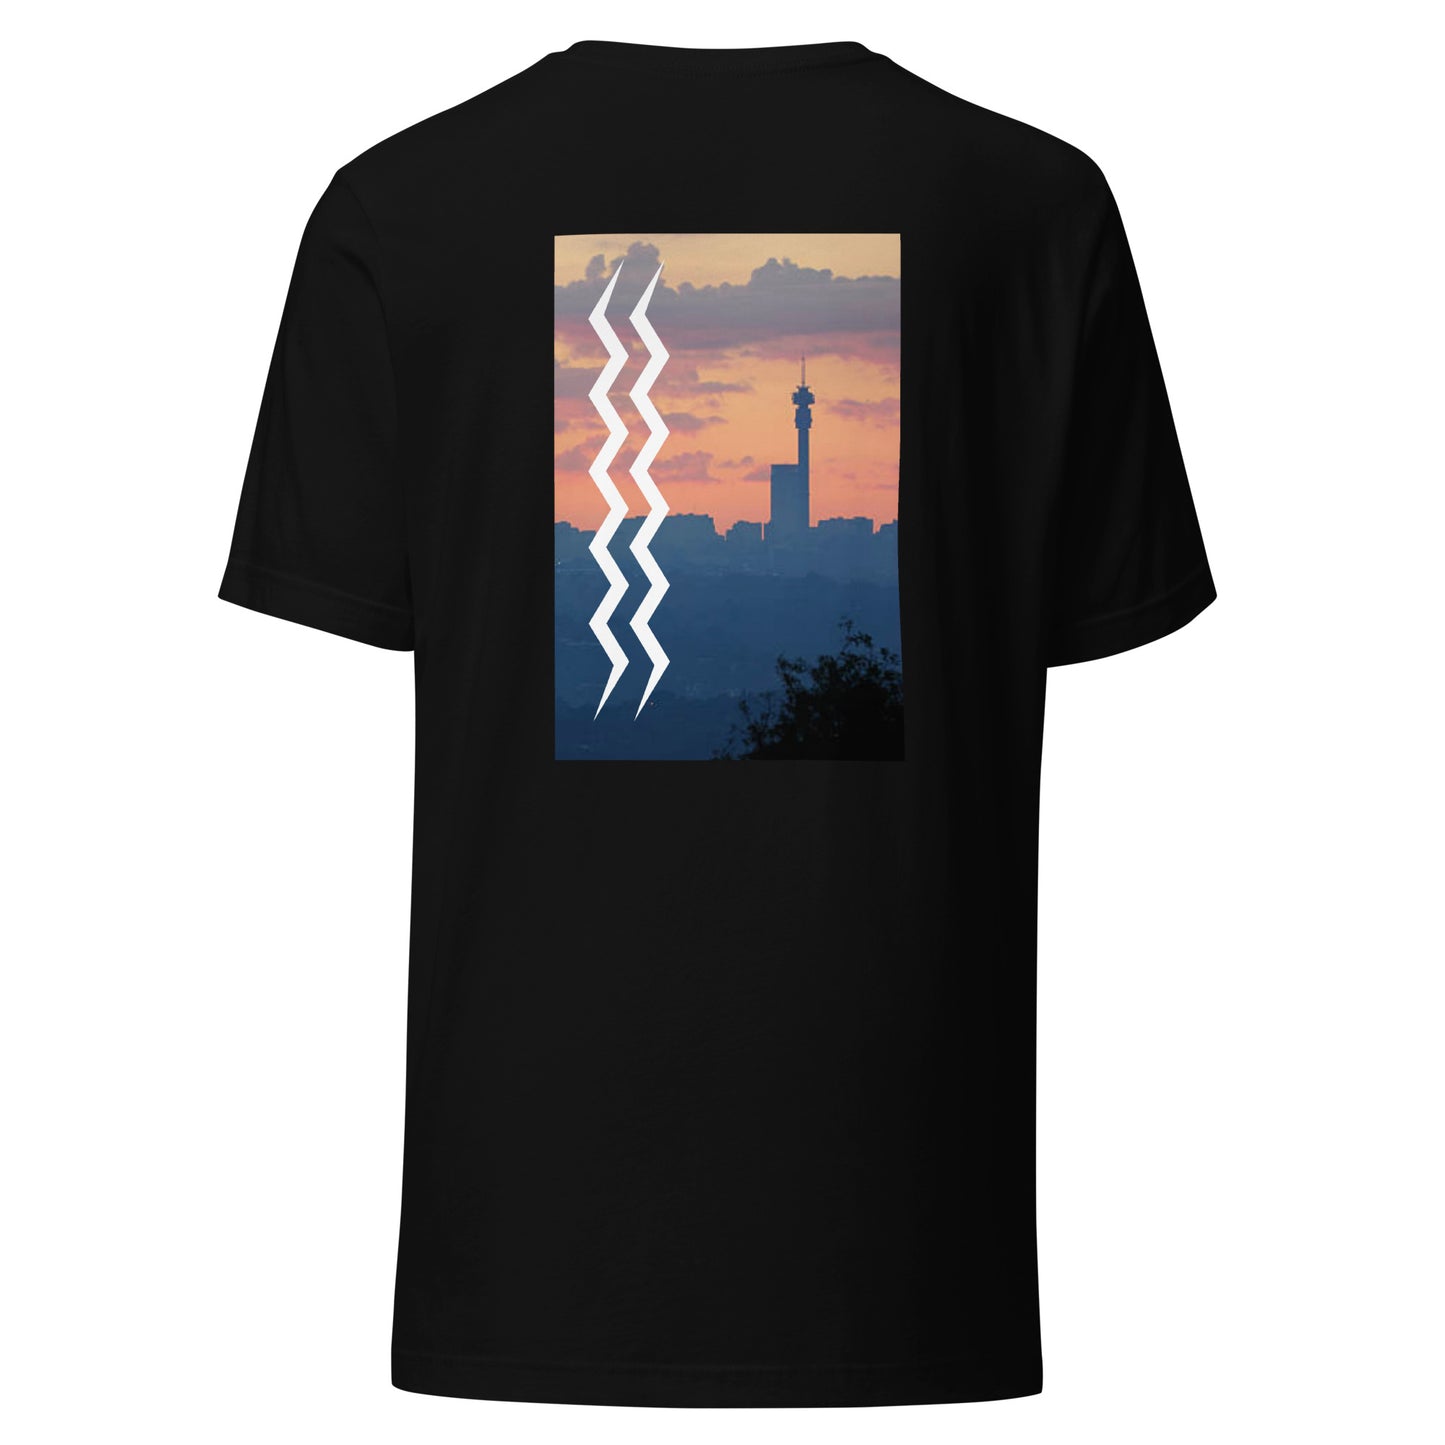 ANOYNTD [ JO'BURG] Series Unisex t-shirt